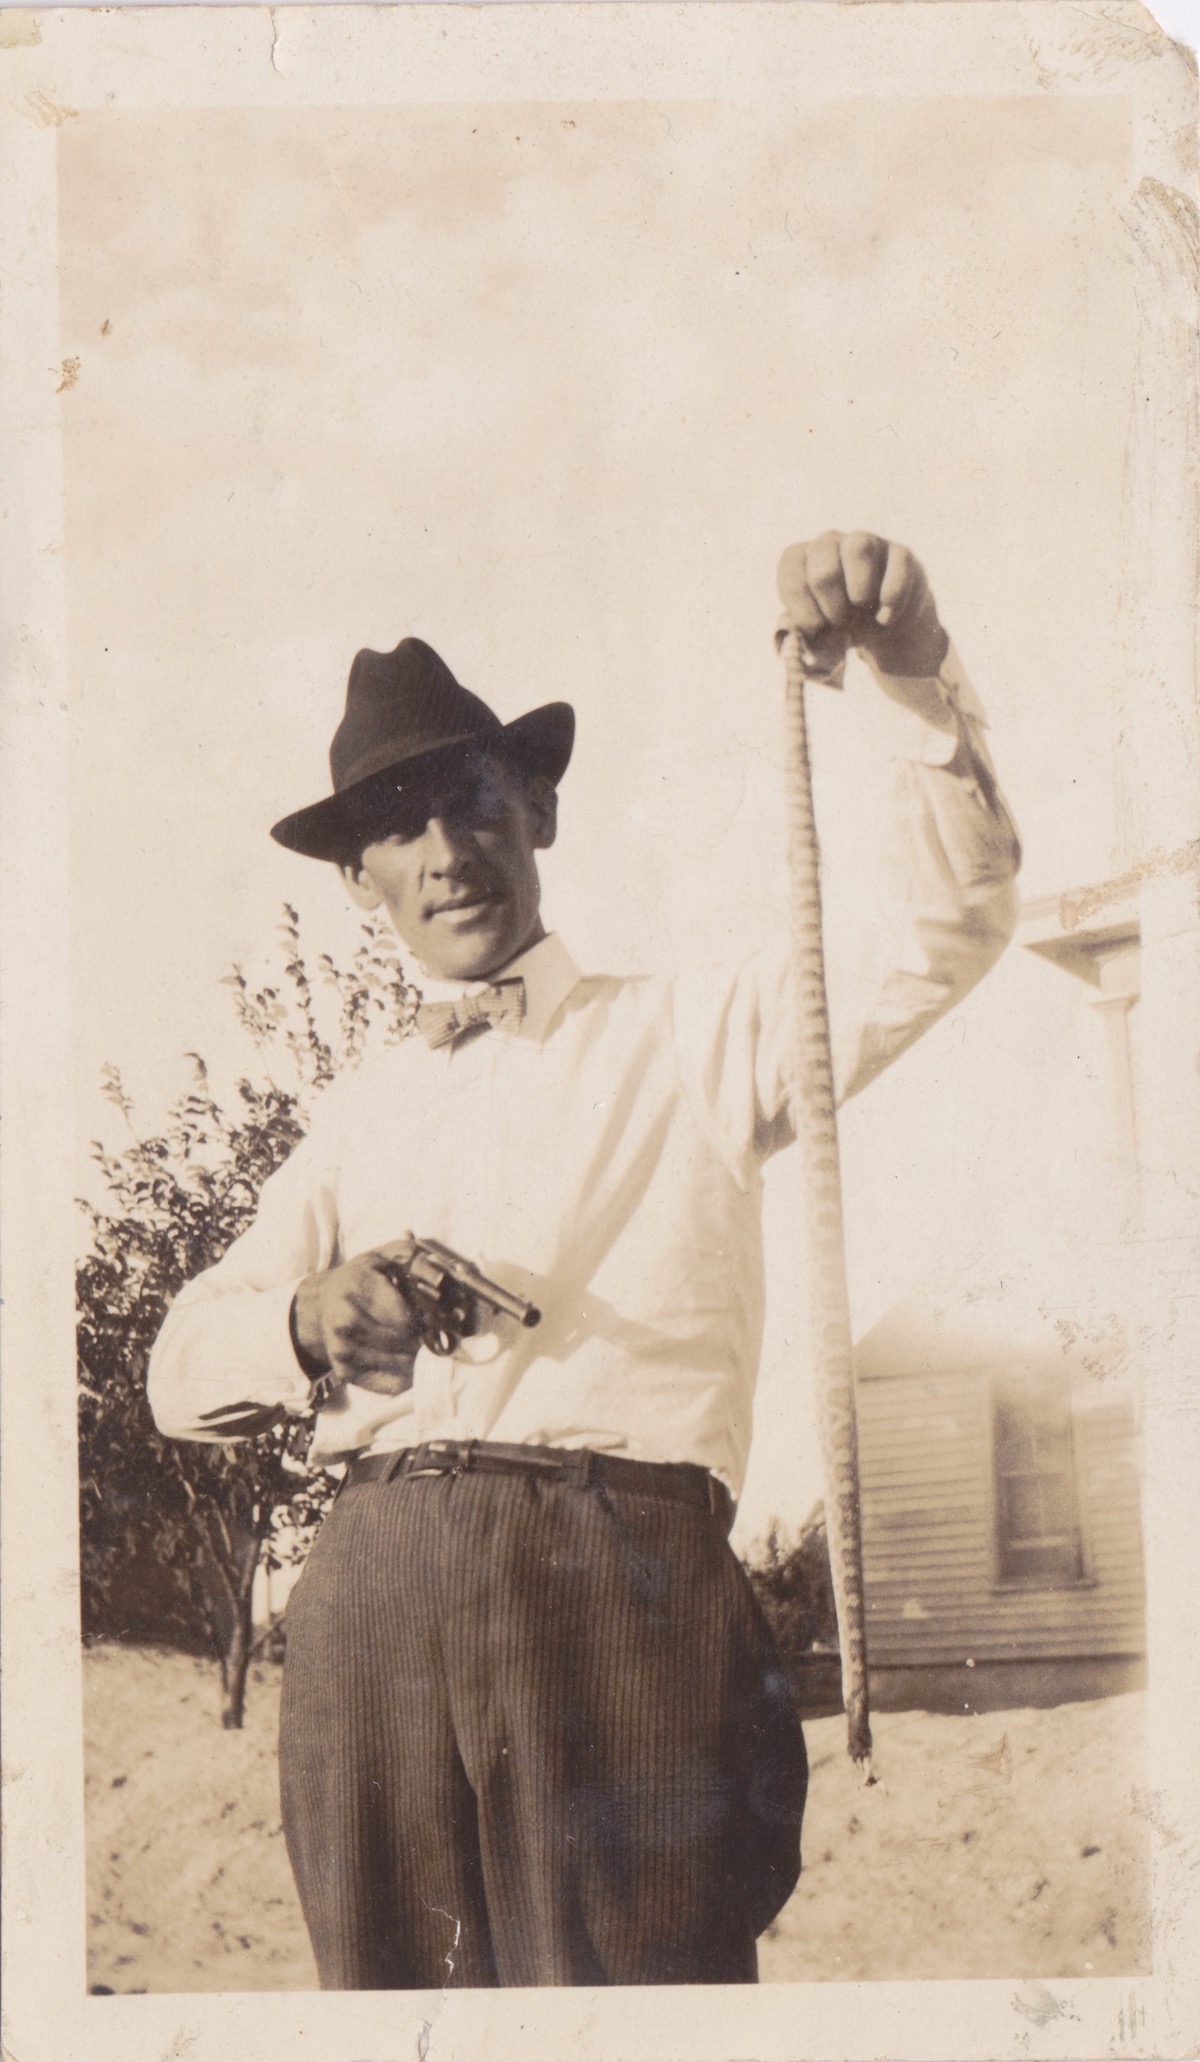 K.C. Potter (grandfather) holding a gun. 